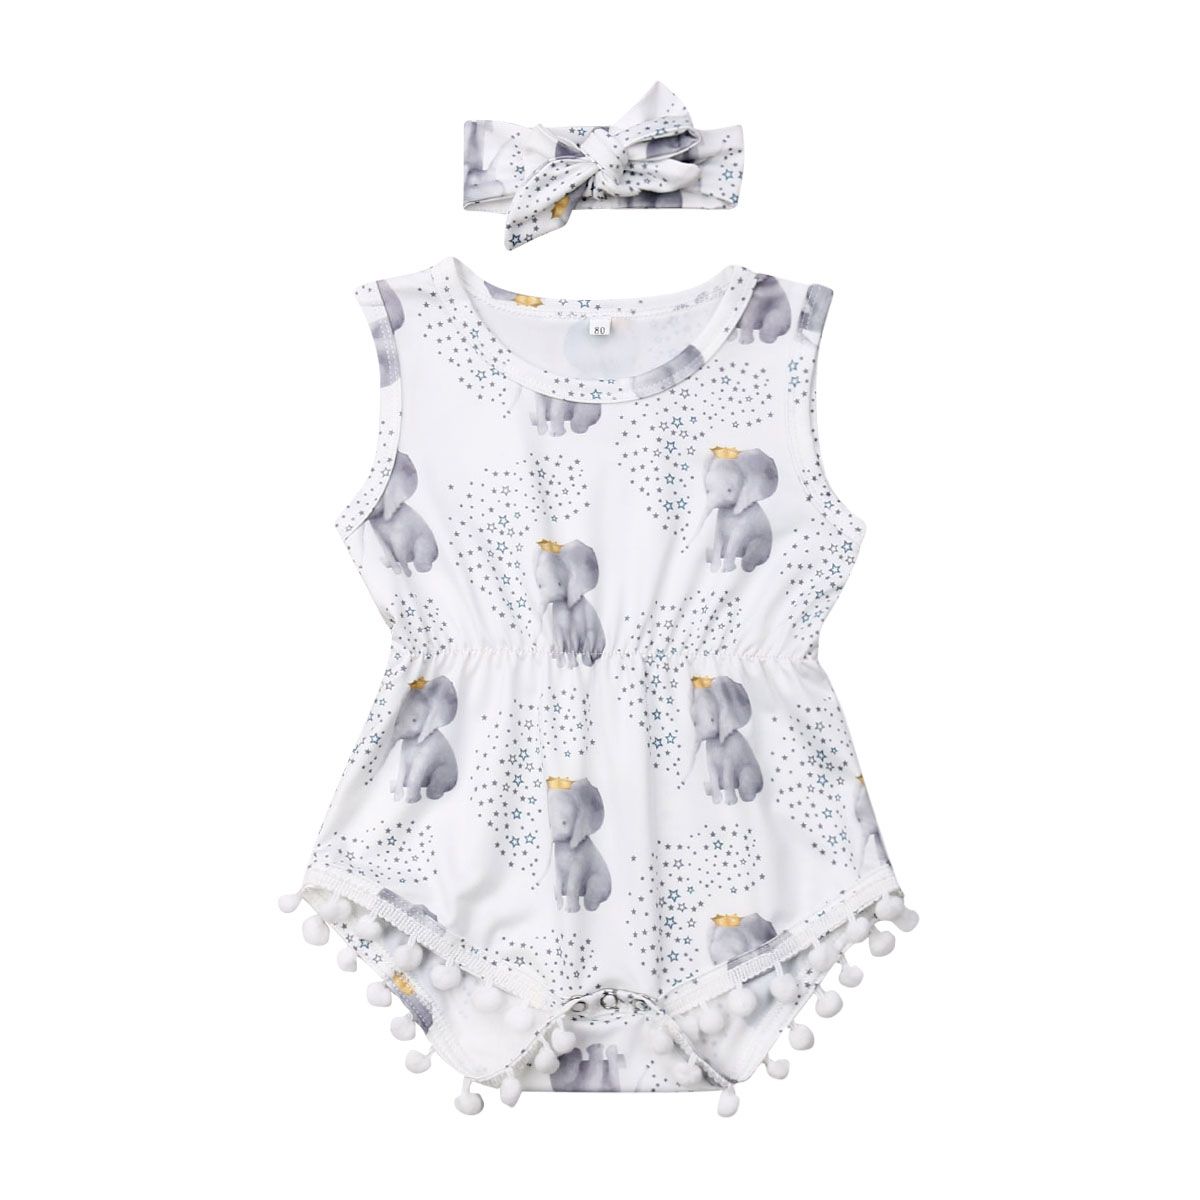 UK Newborn Infant Baby Girl Sunsuit Rompers Clothes Outfit Set Playsuit Jumpsuit